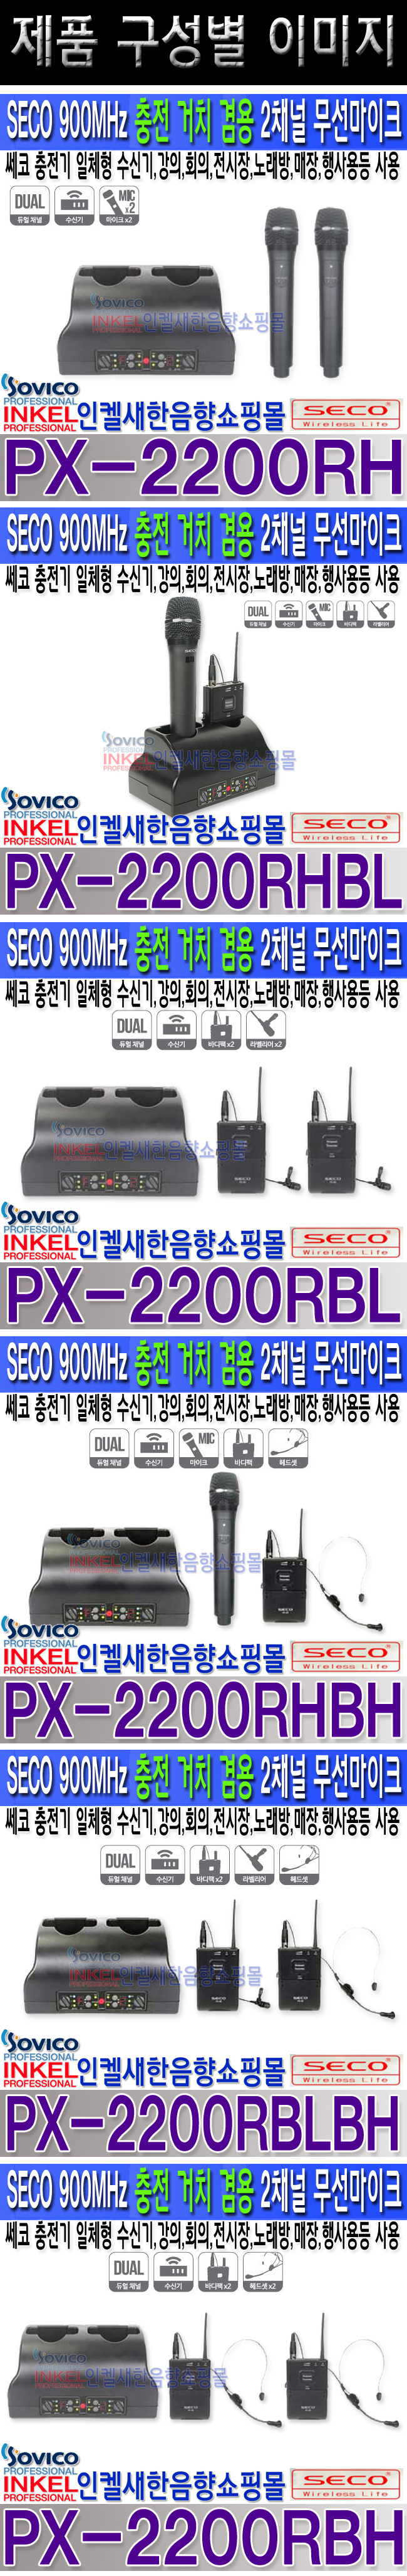 PX-22000 SE.jpg